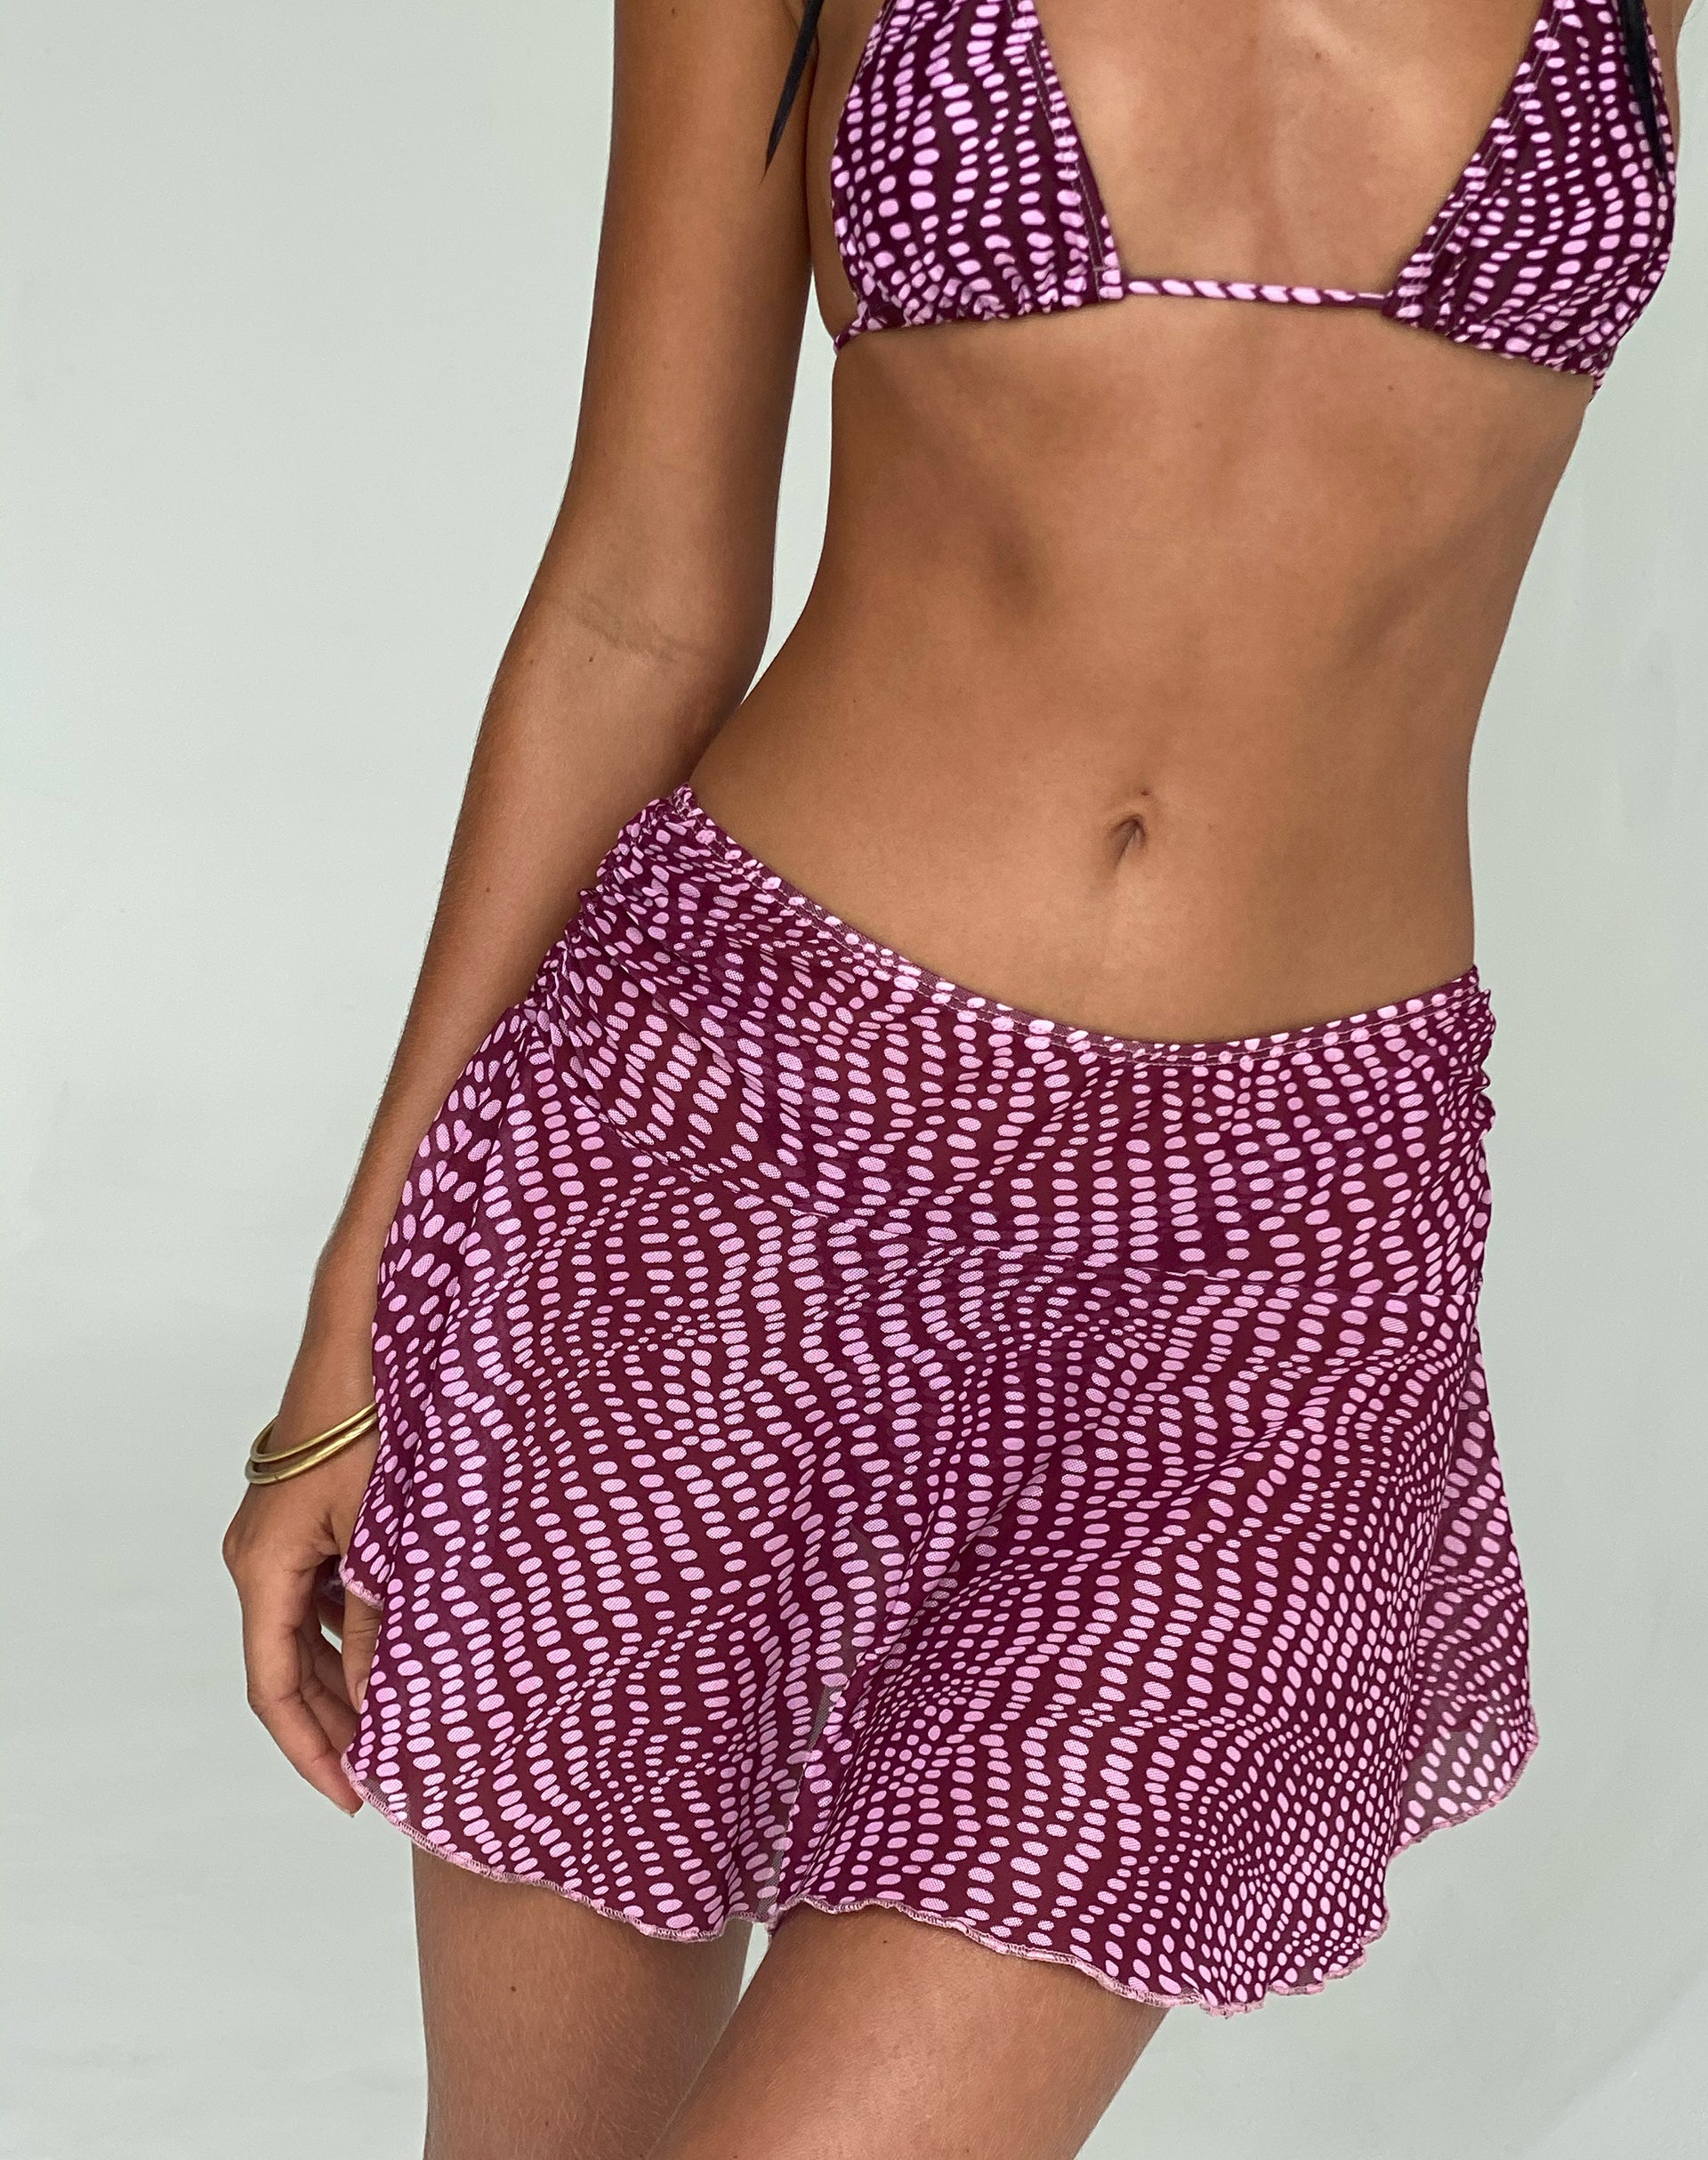 Image of Orla Mini Skirt in Mesh Purple Irregular Polka